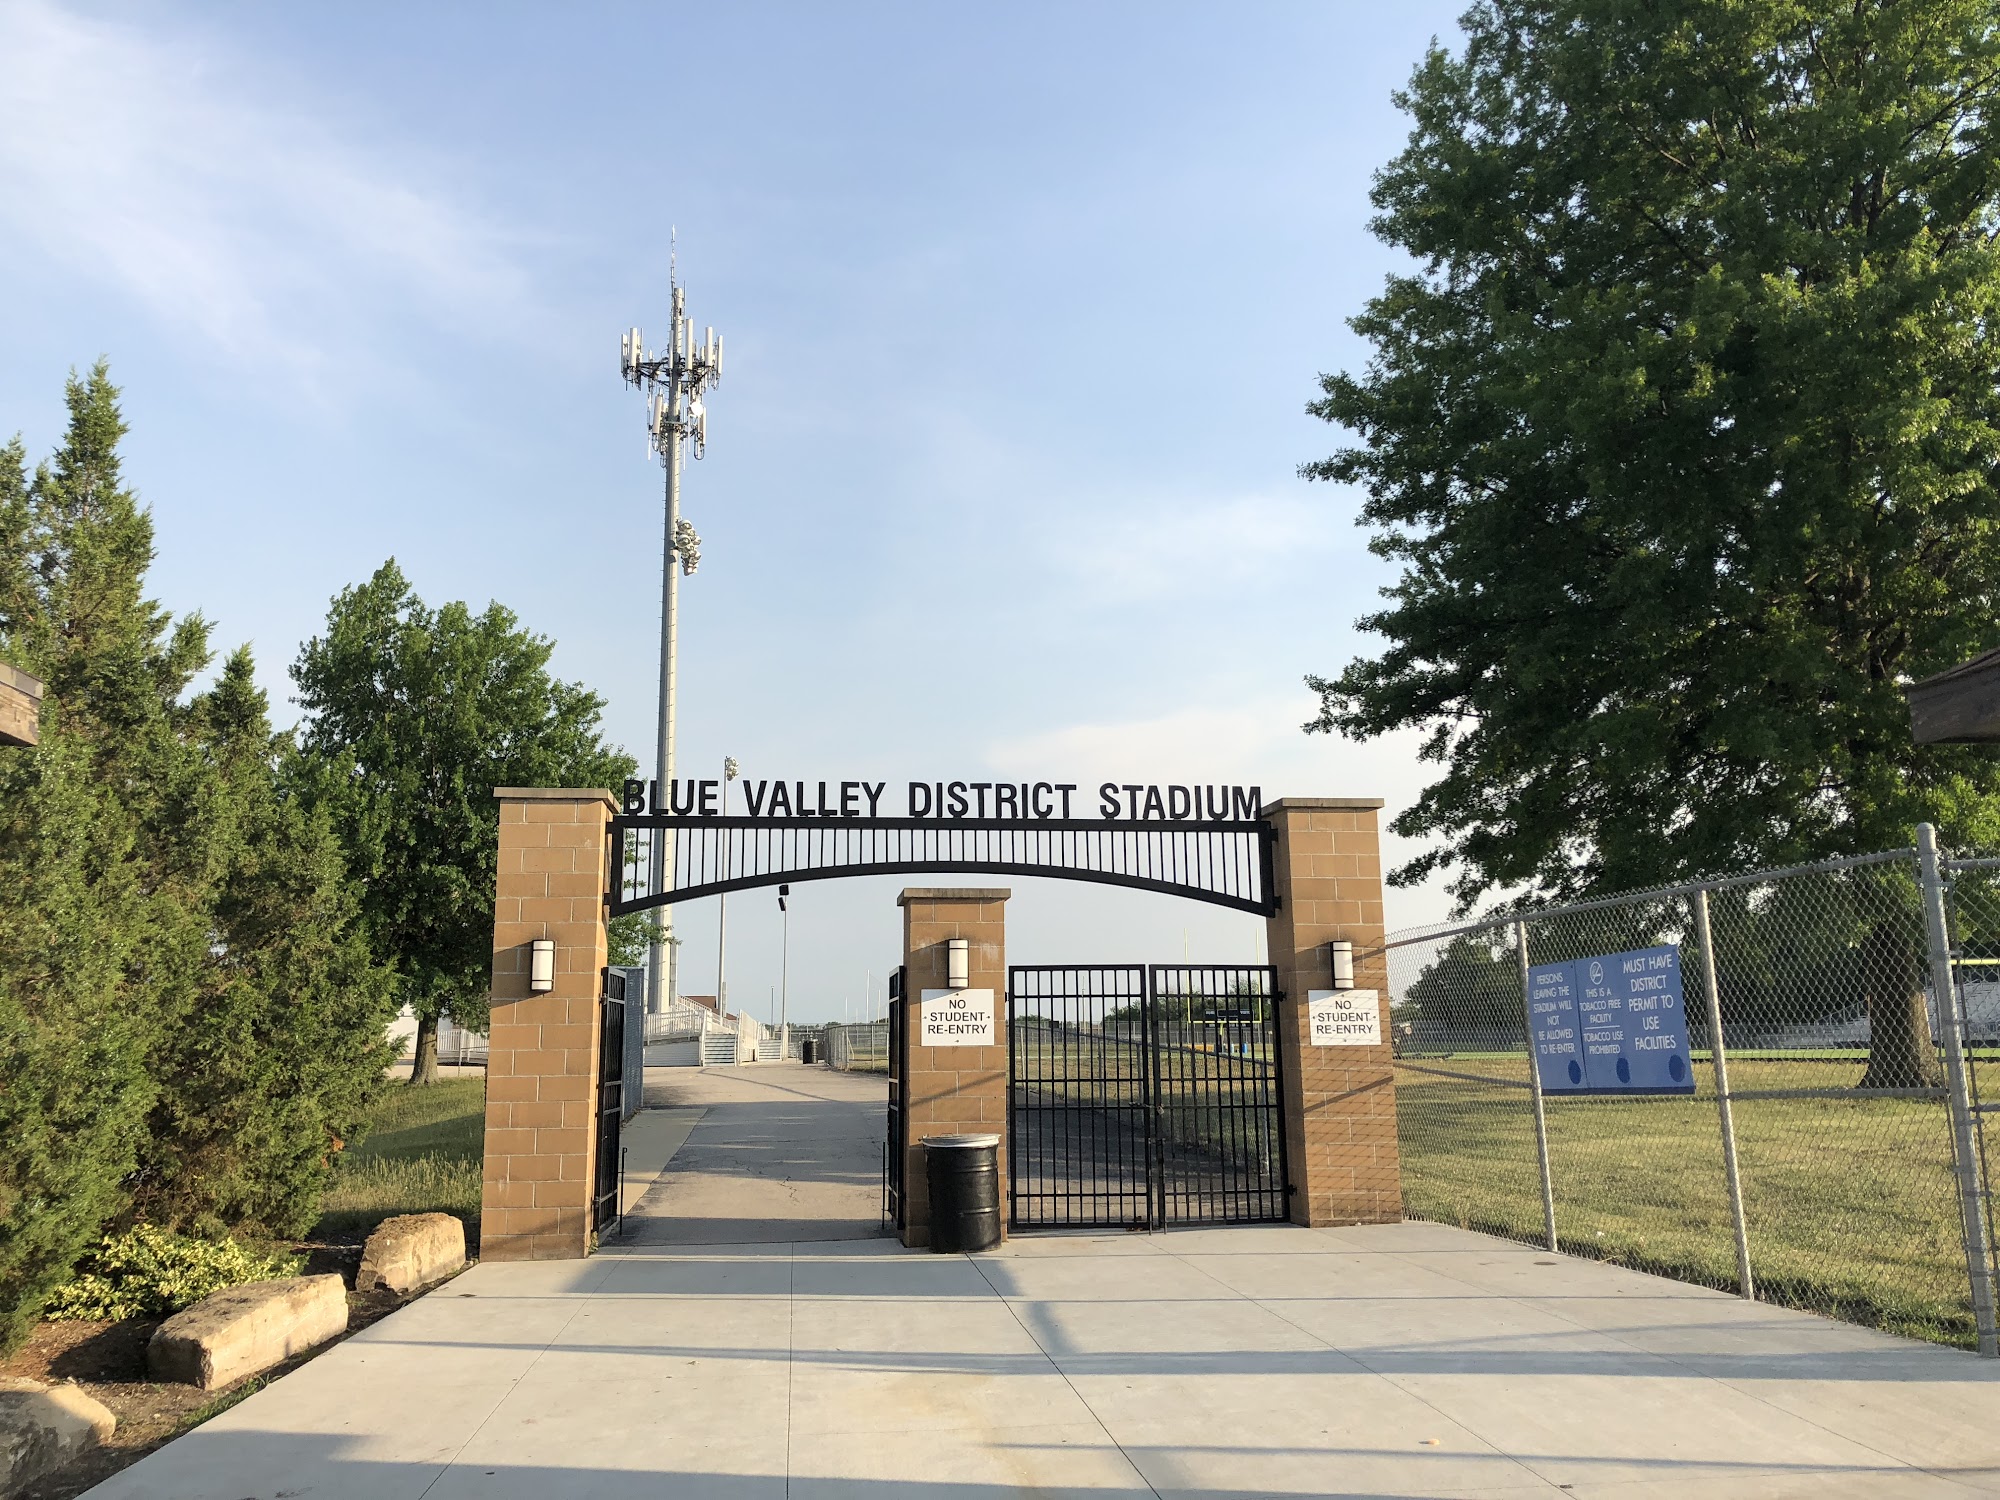 Blue Valley High School